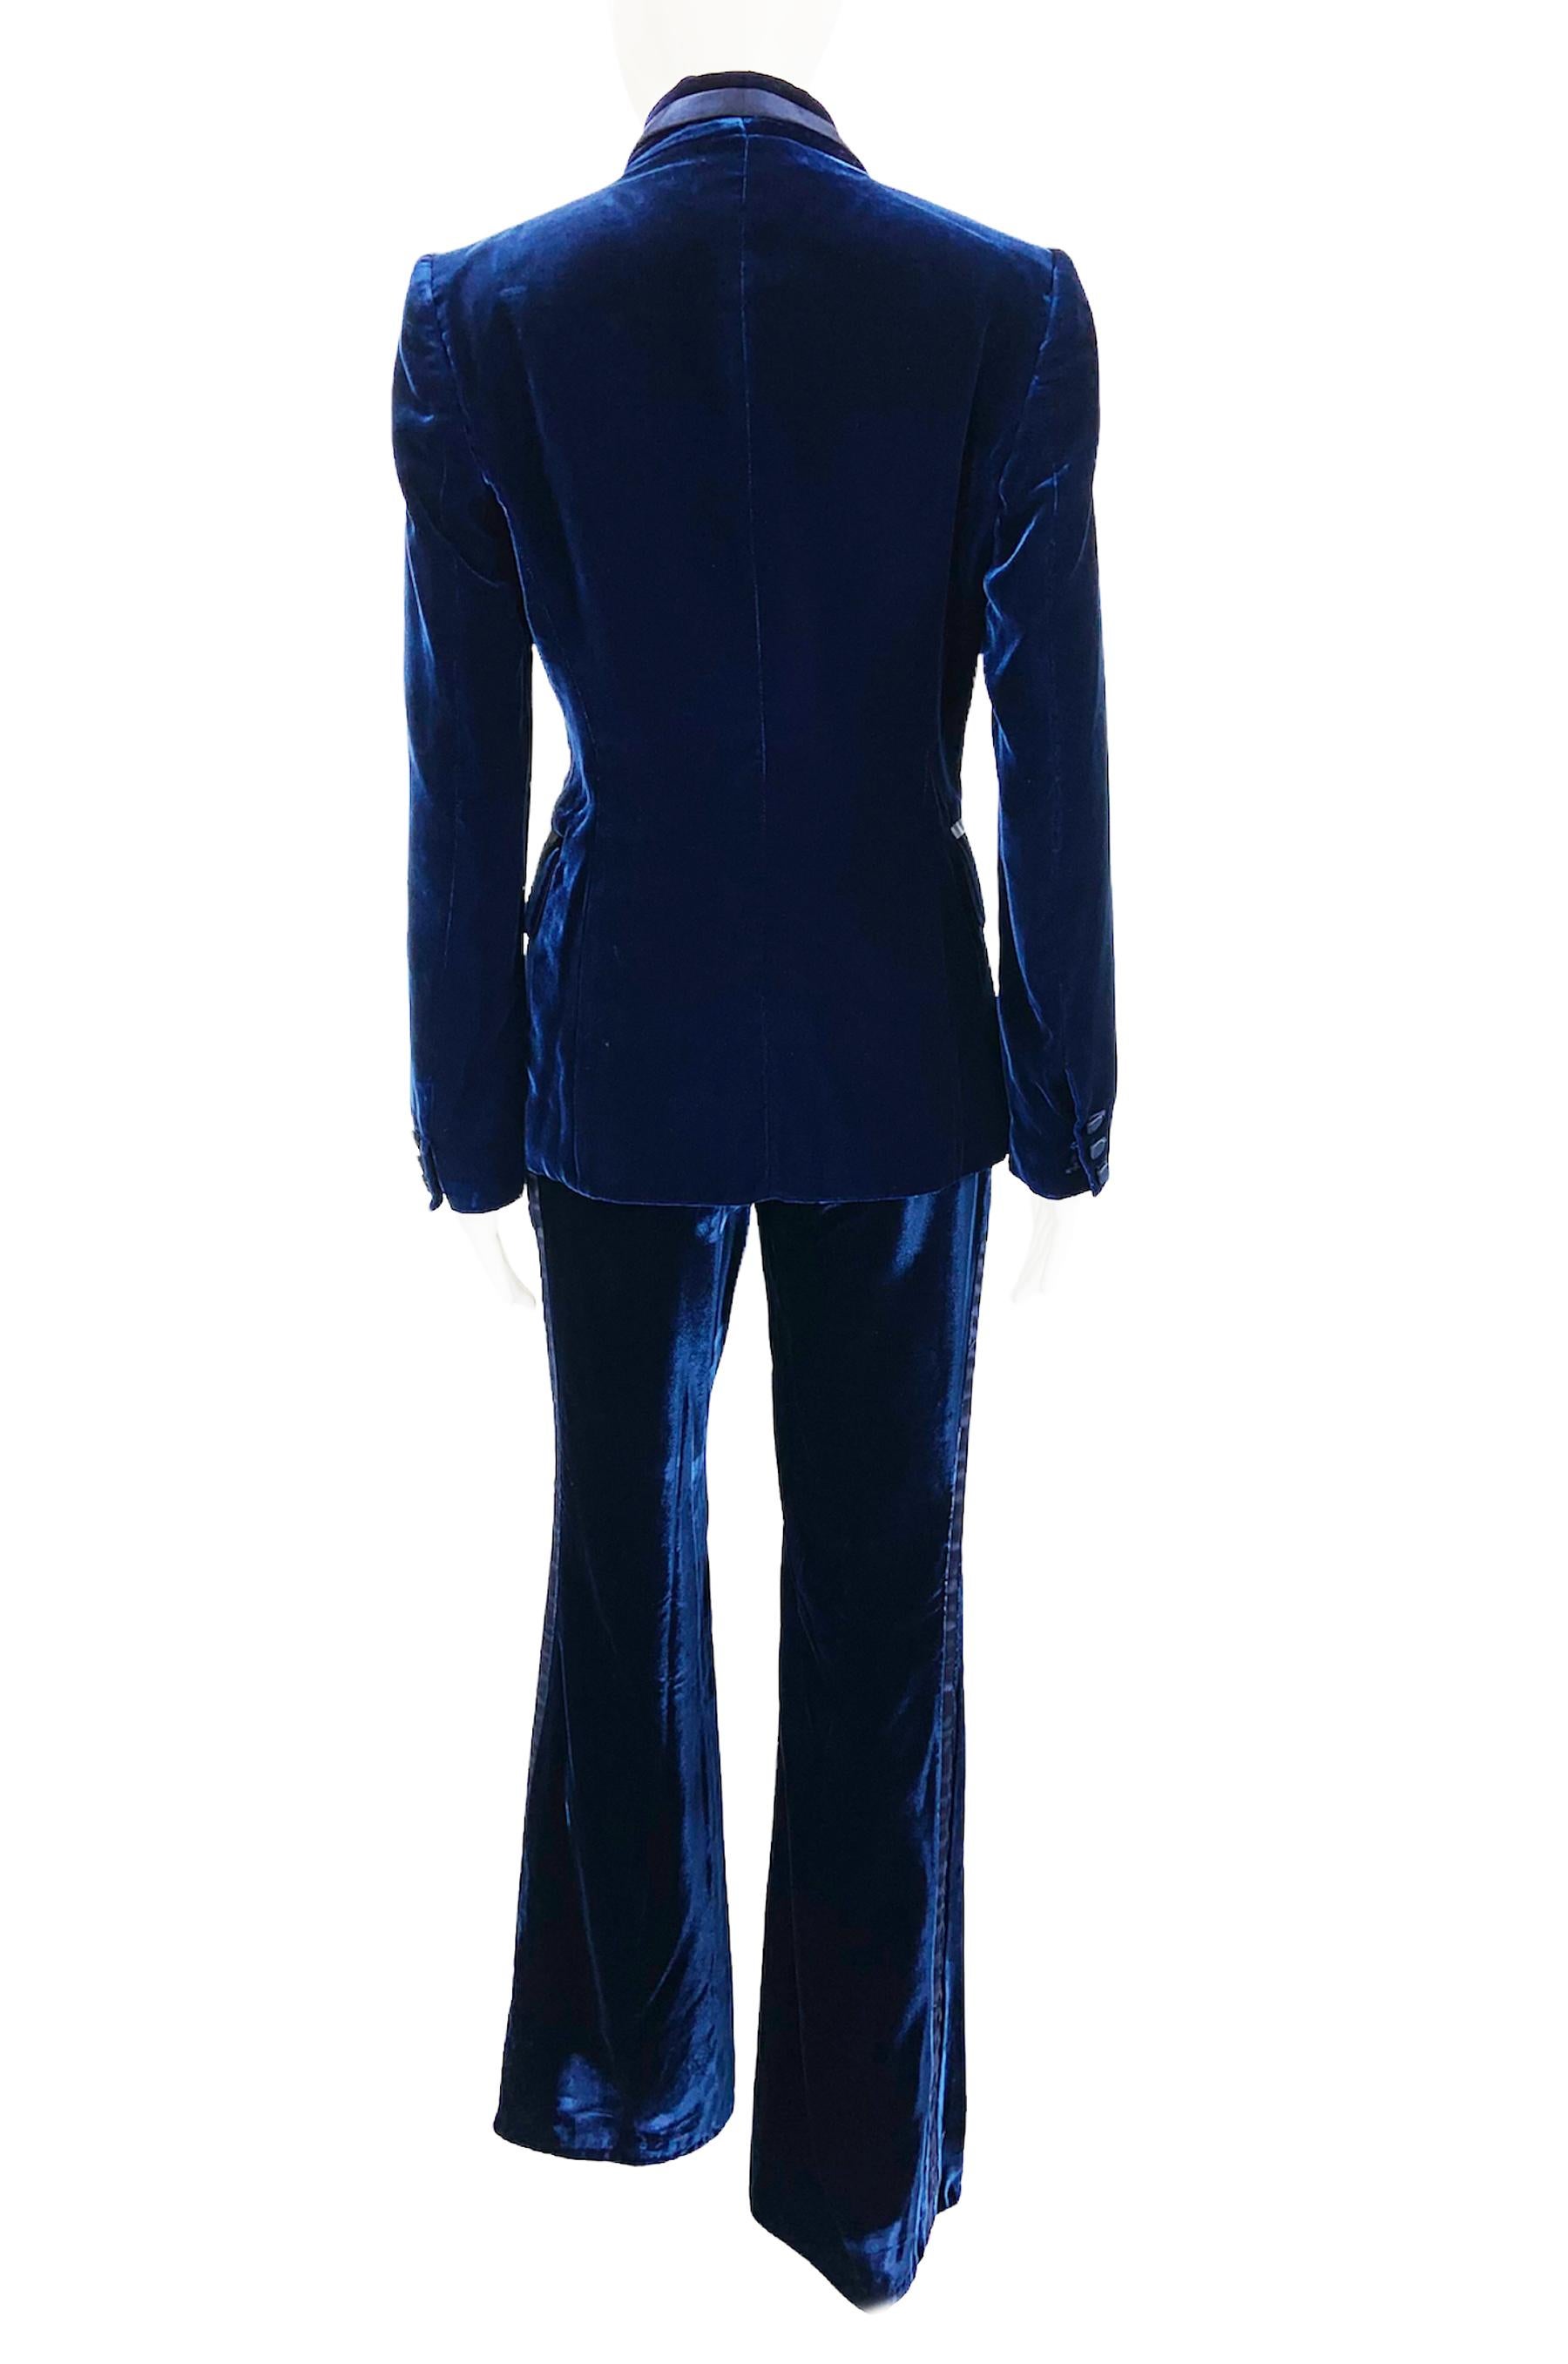 Women's Iconic Tom Ford for Gucci Runway FW 2004 Blue Velvet Tuxedo Pant Suit It 38